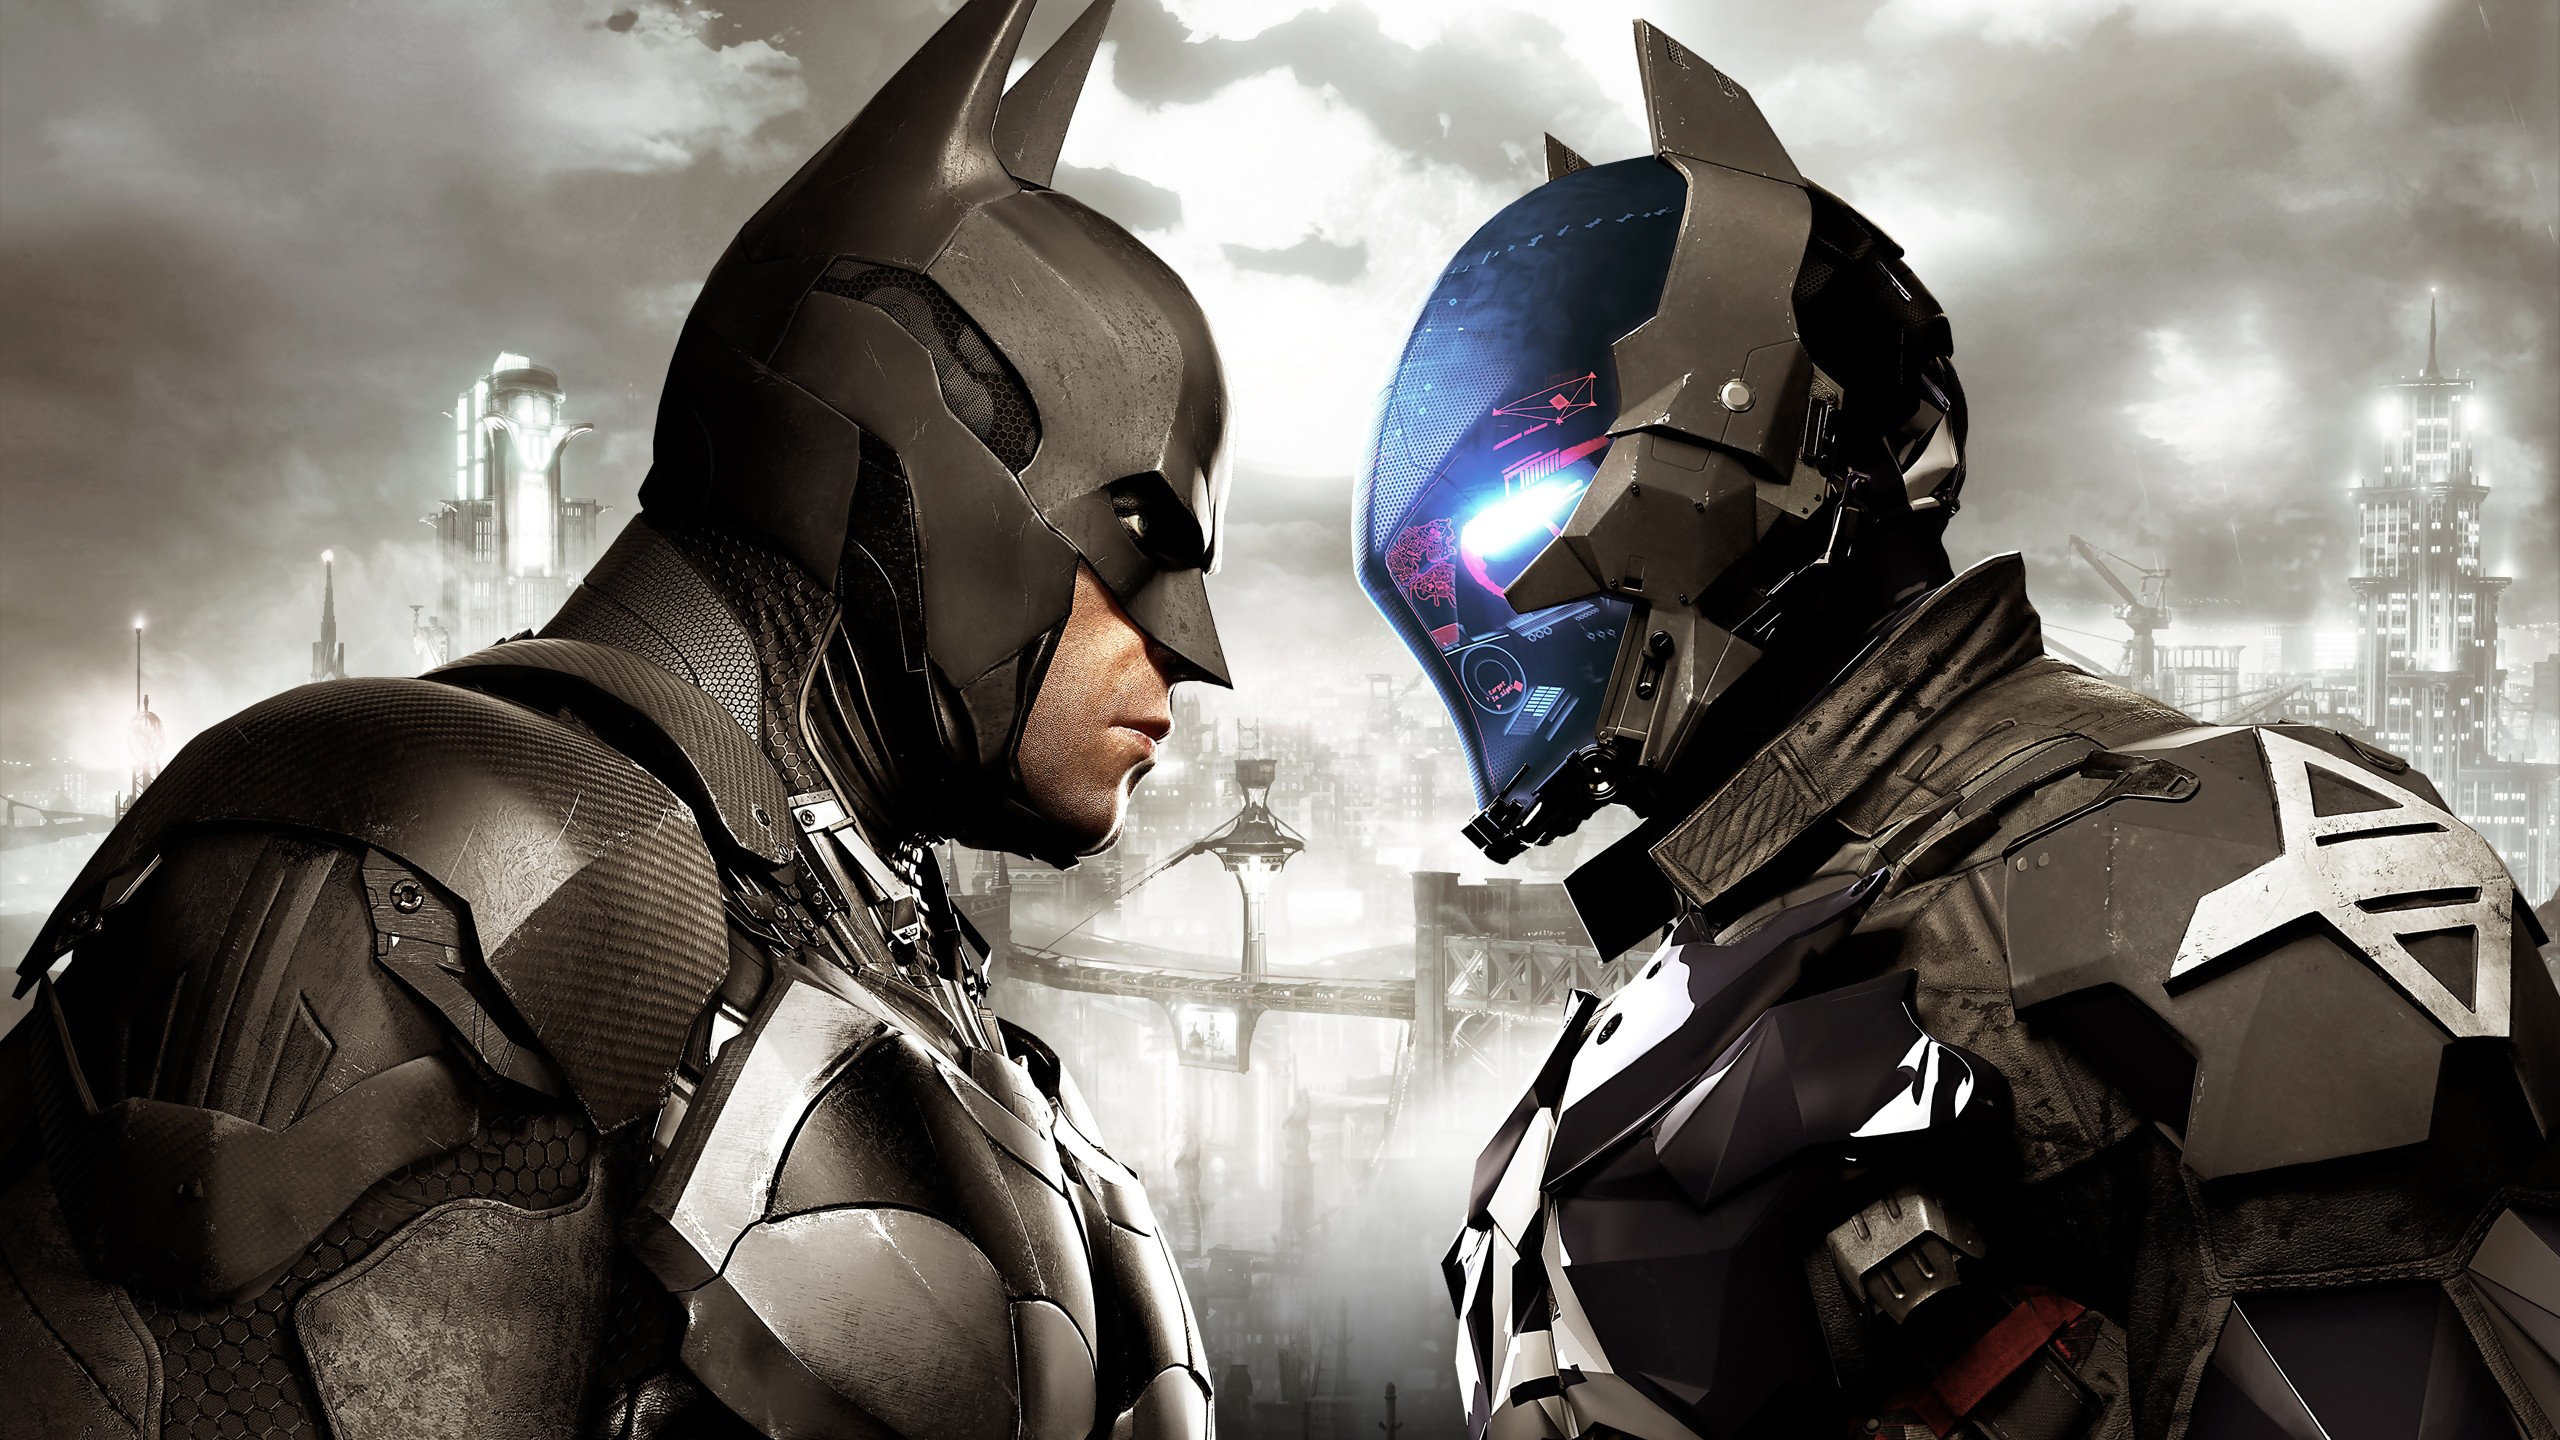 Best Batman: Arkham Knight background ID:174097 for High Resolution hd 2560x1440 computer